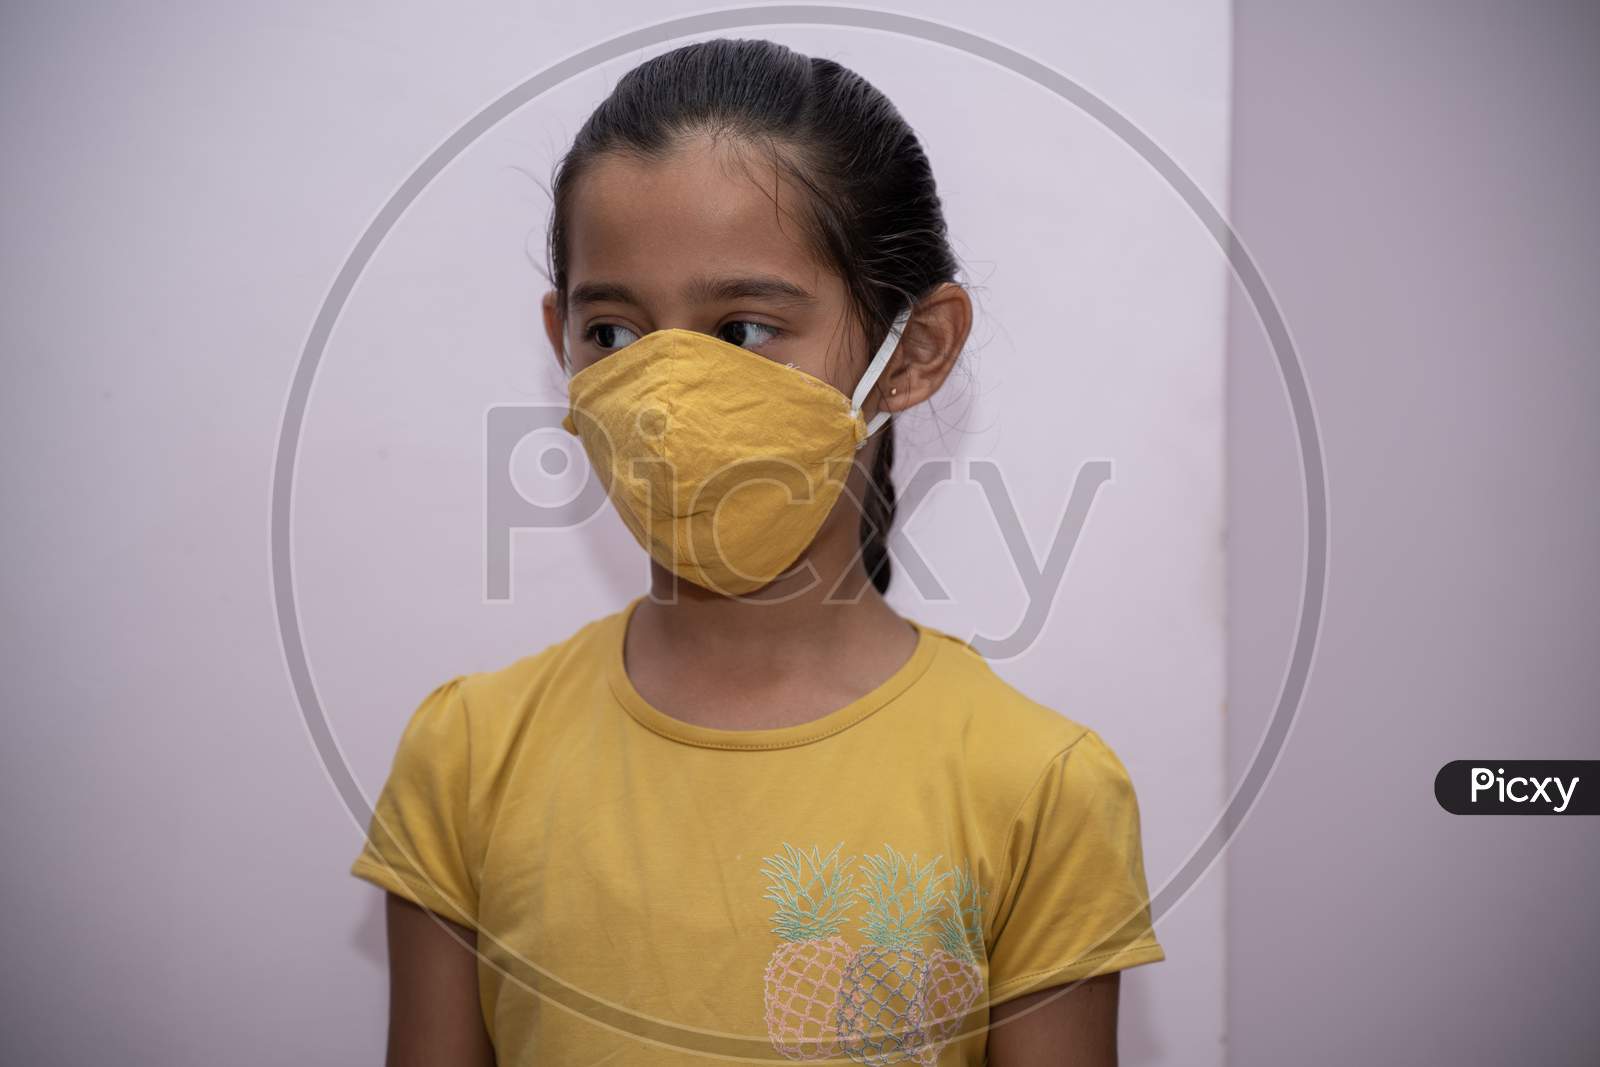 jaipur . Rajasthan . India - June 12, 2020. Asian girl wearing protective face mask Protect from the corona virus or Coronavirus covid-19